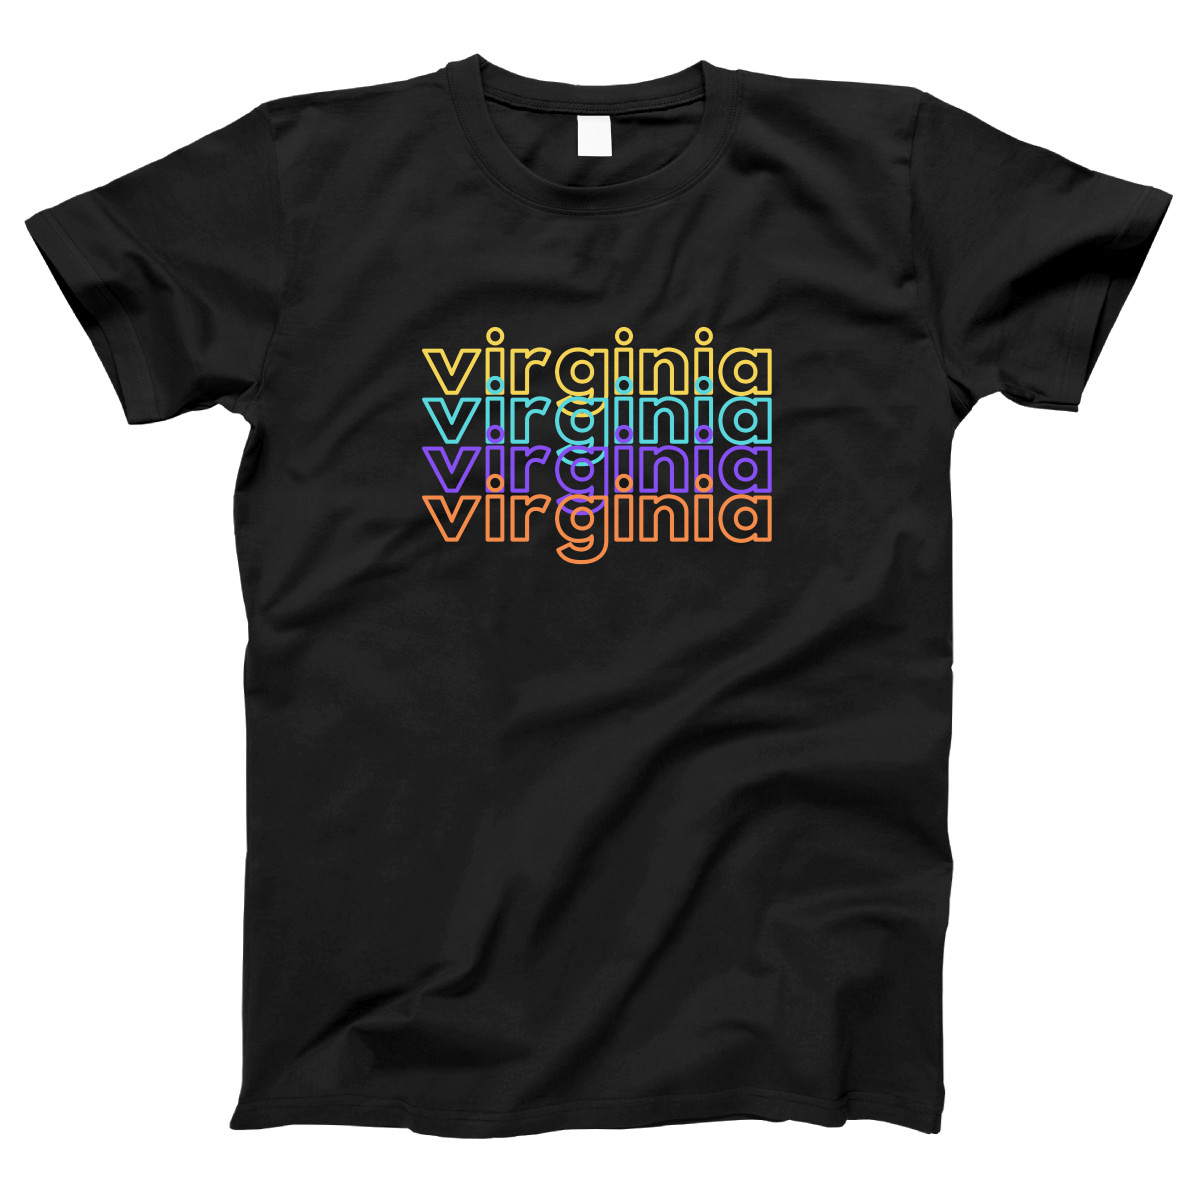 Virginia Women's T-shirt | Black